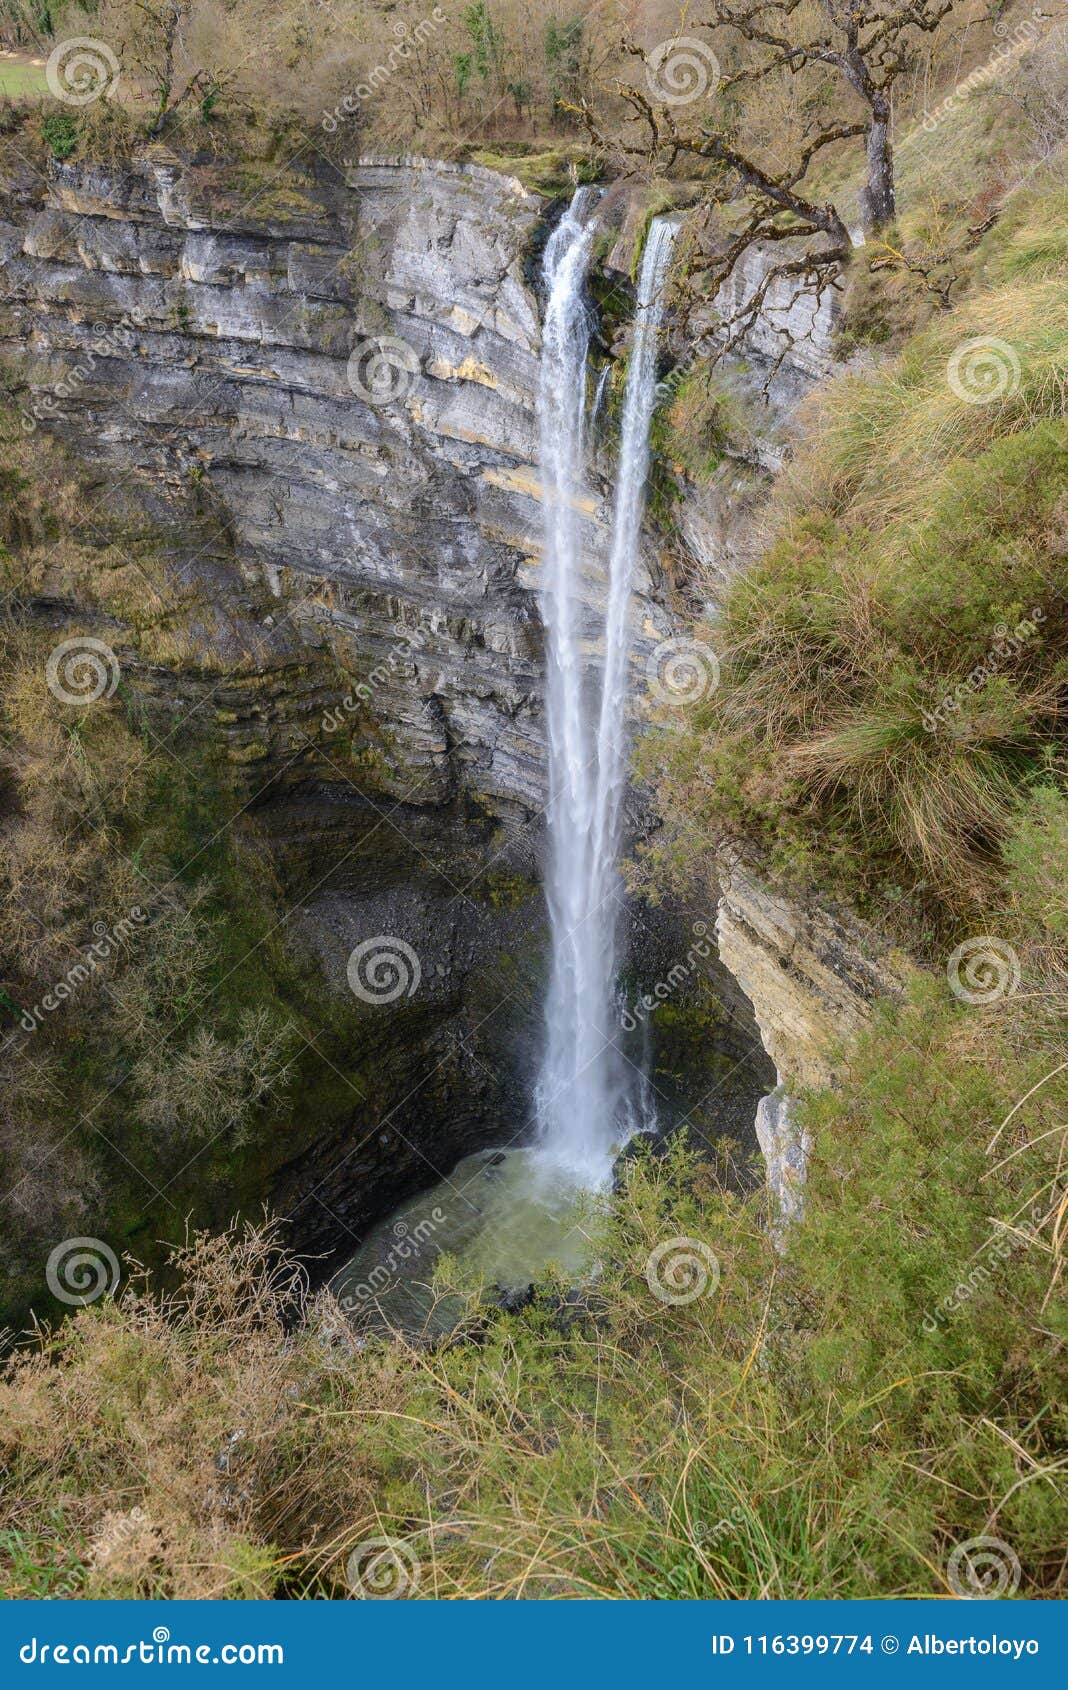 gujuli waterfall, basque country, spain